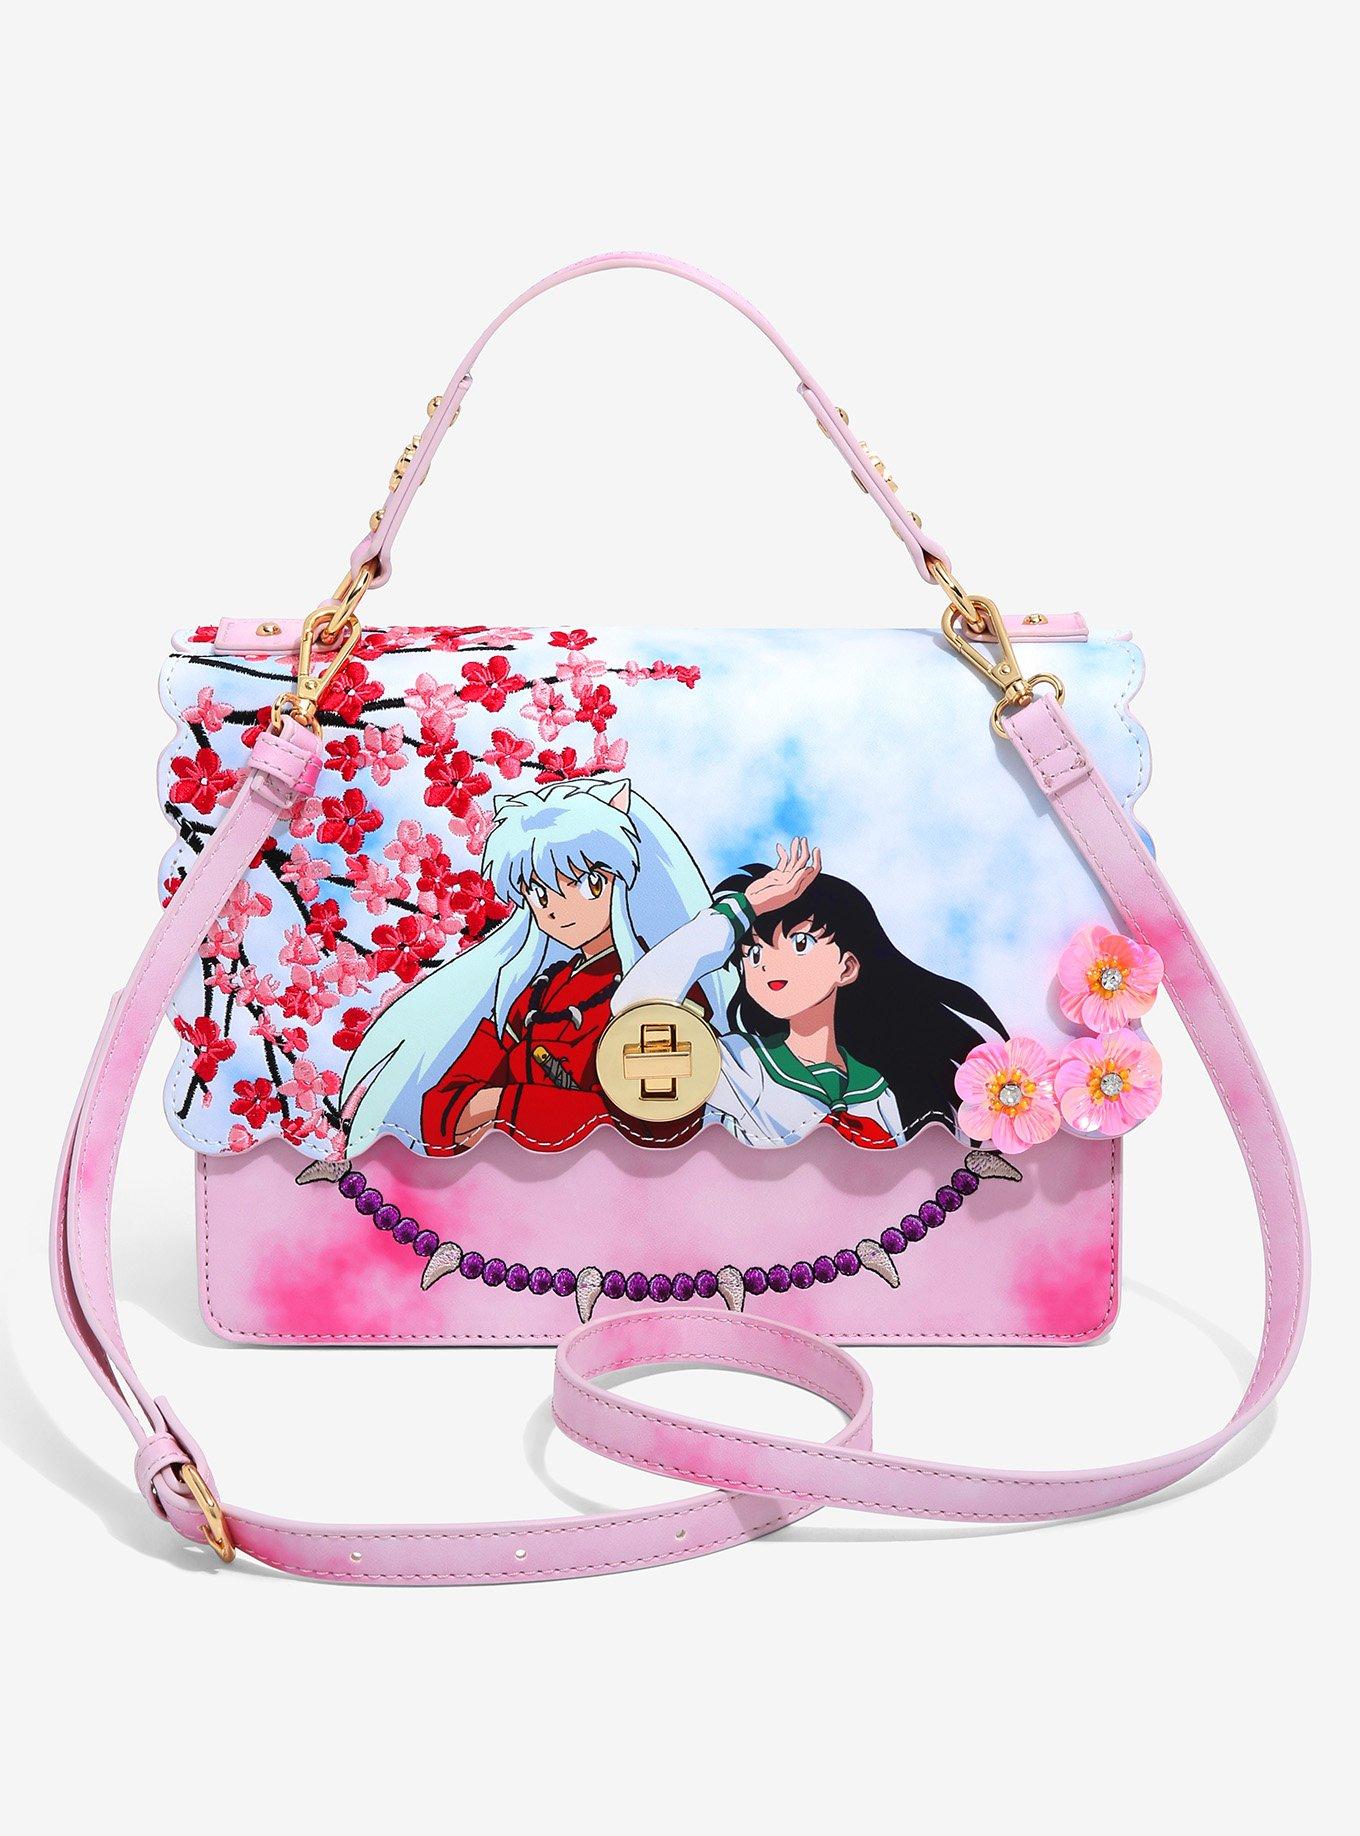 InuYasha Kagome & InuYasha Cherry Blossom Scenic  Handbag - BoxLunch Exclusive